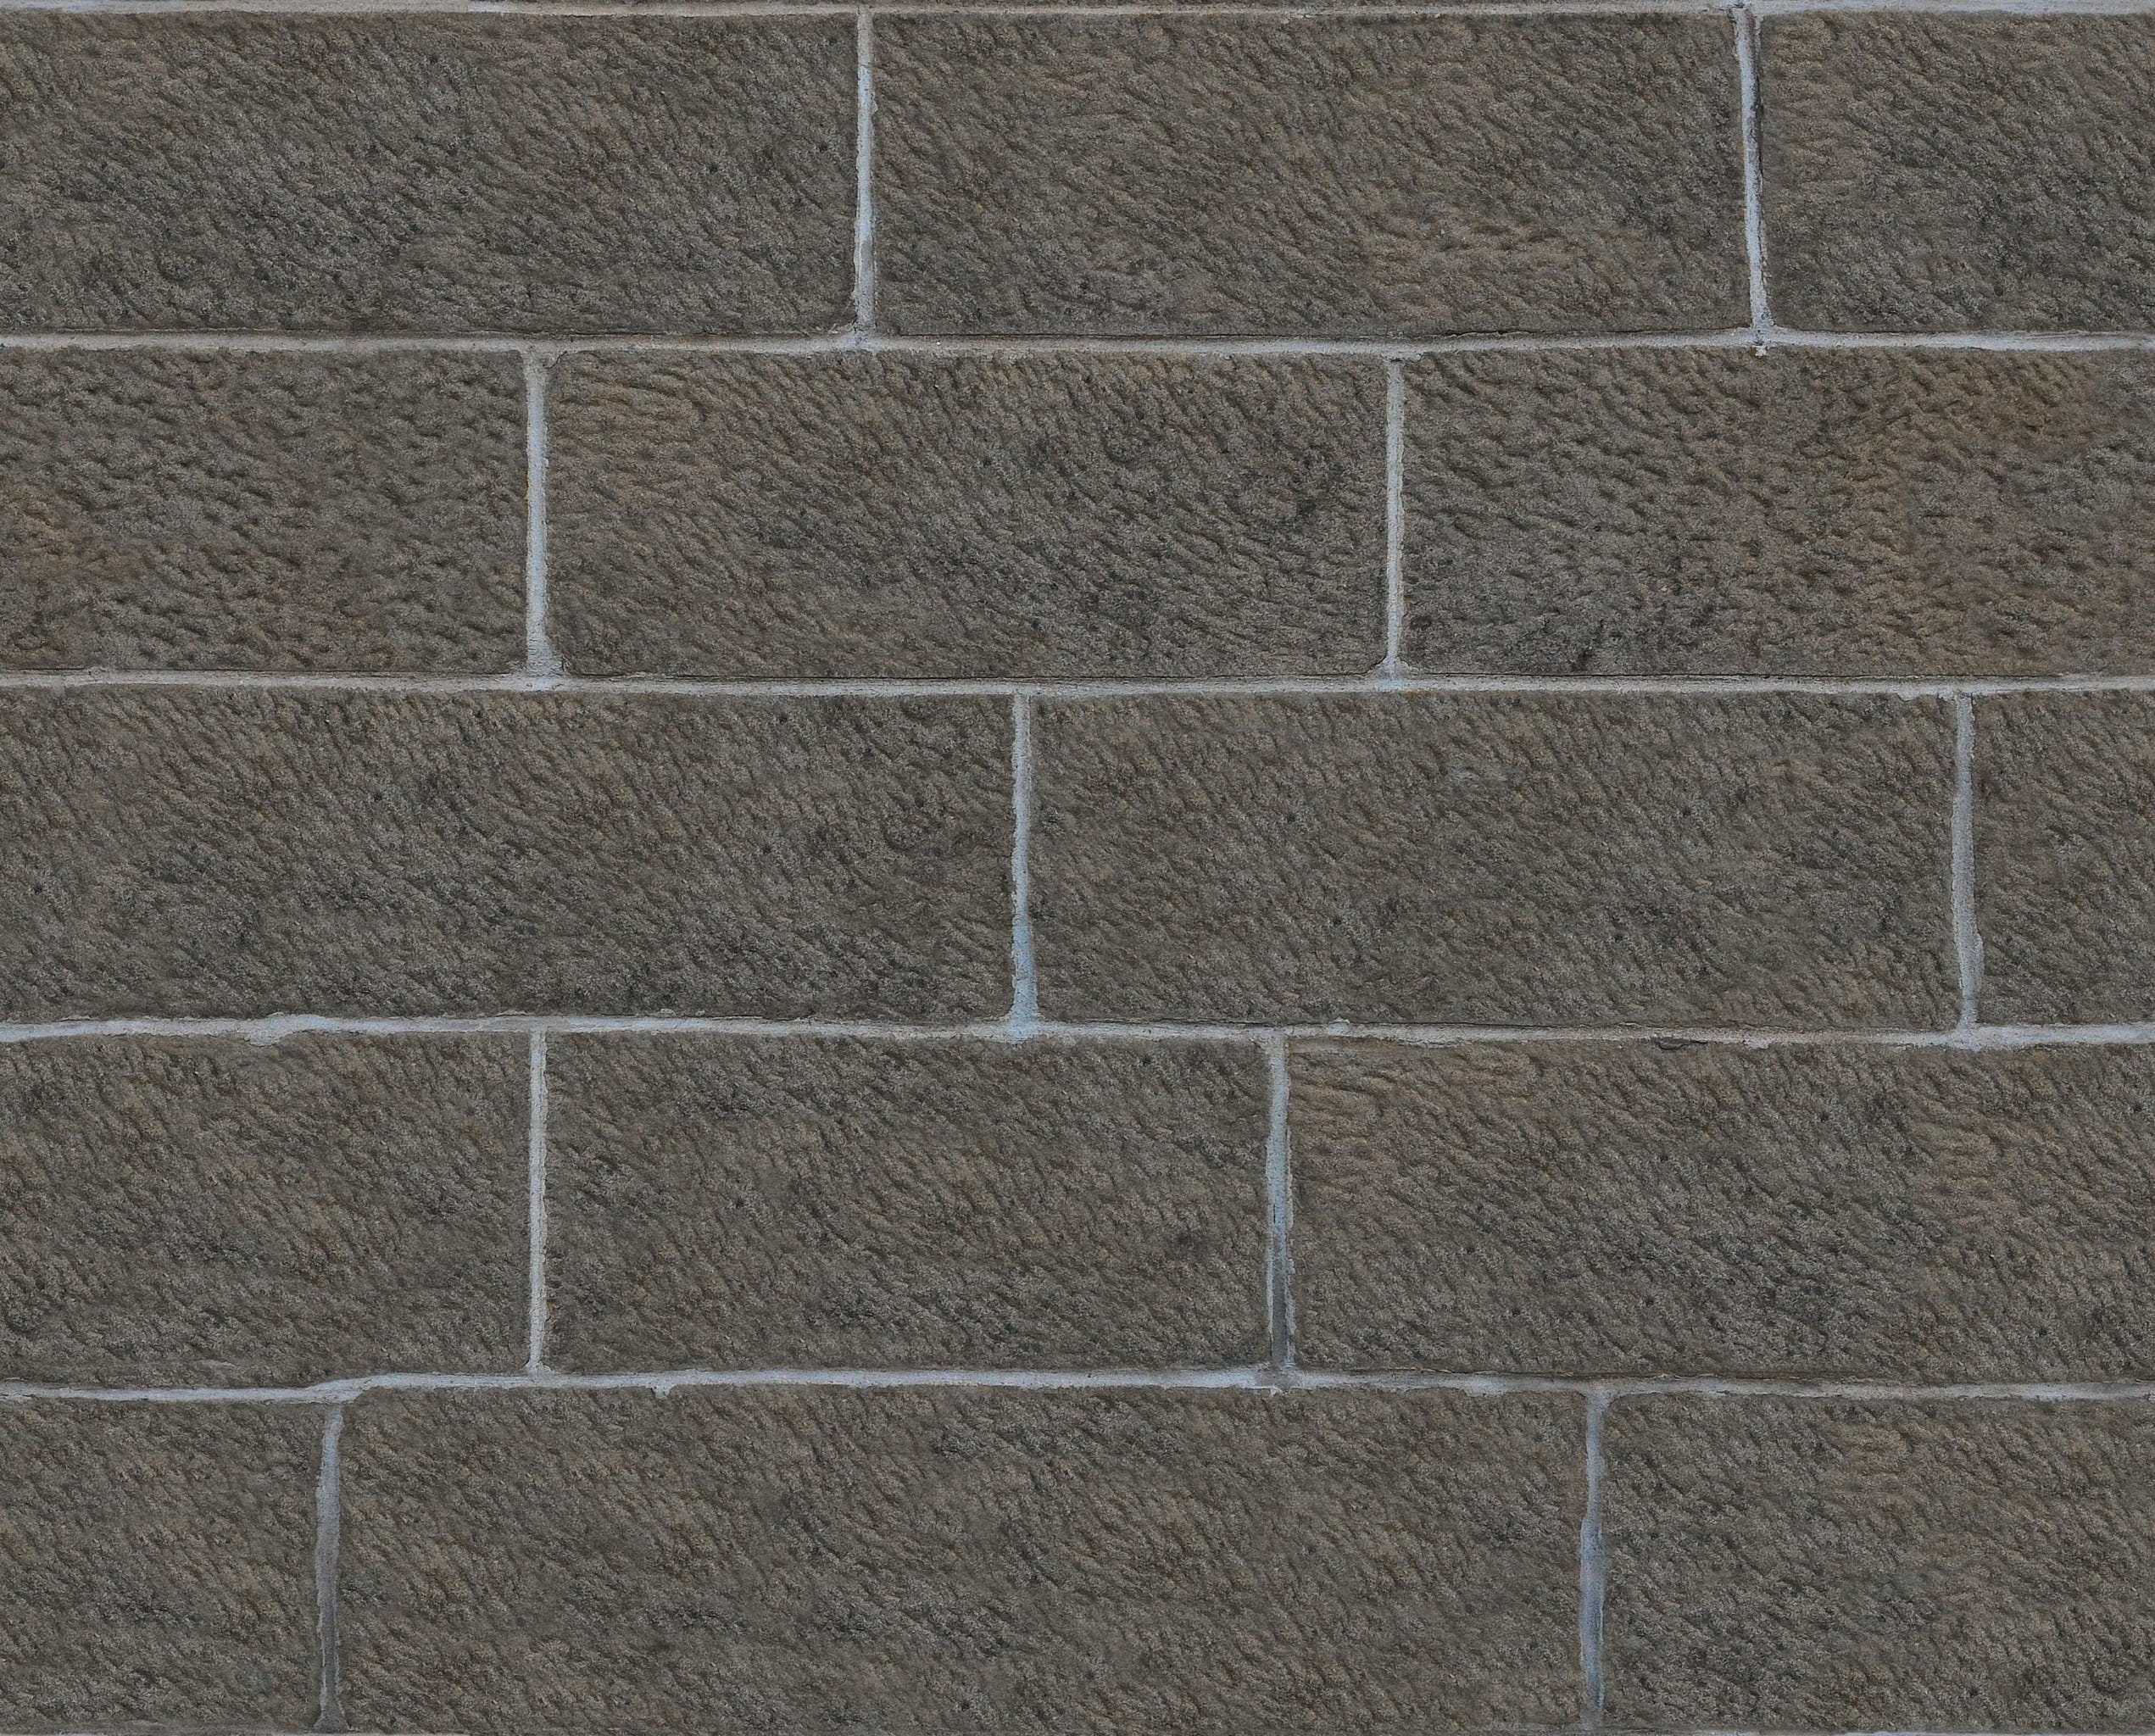 Seamless, Texture, Stone, tileable, bricks, blocks, wall - building feature